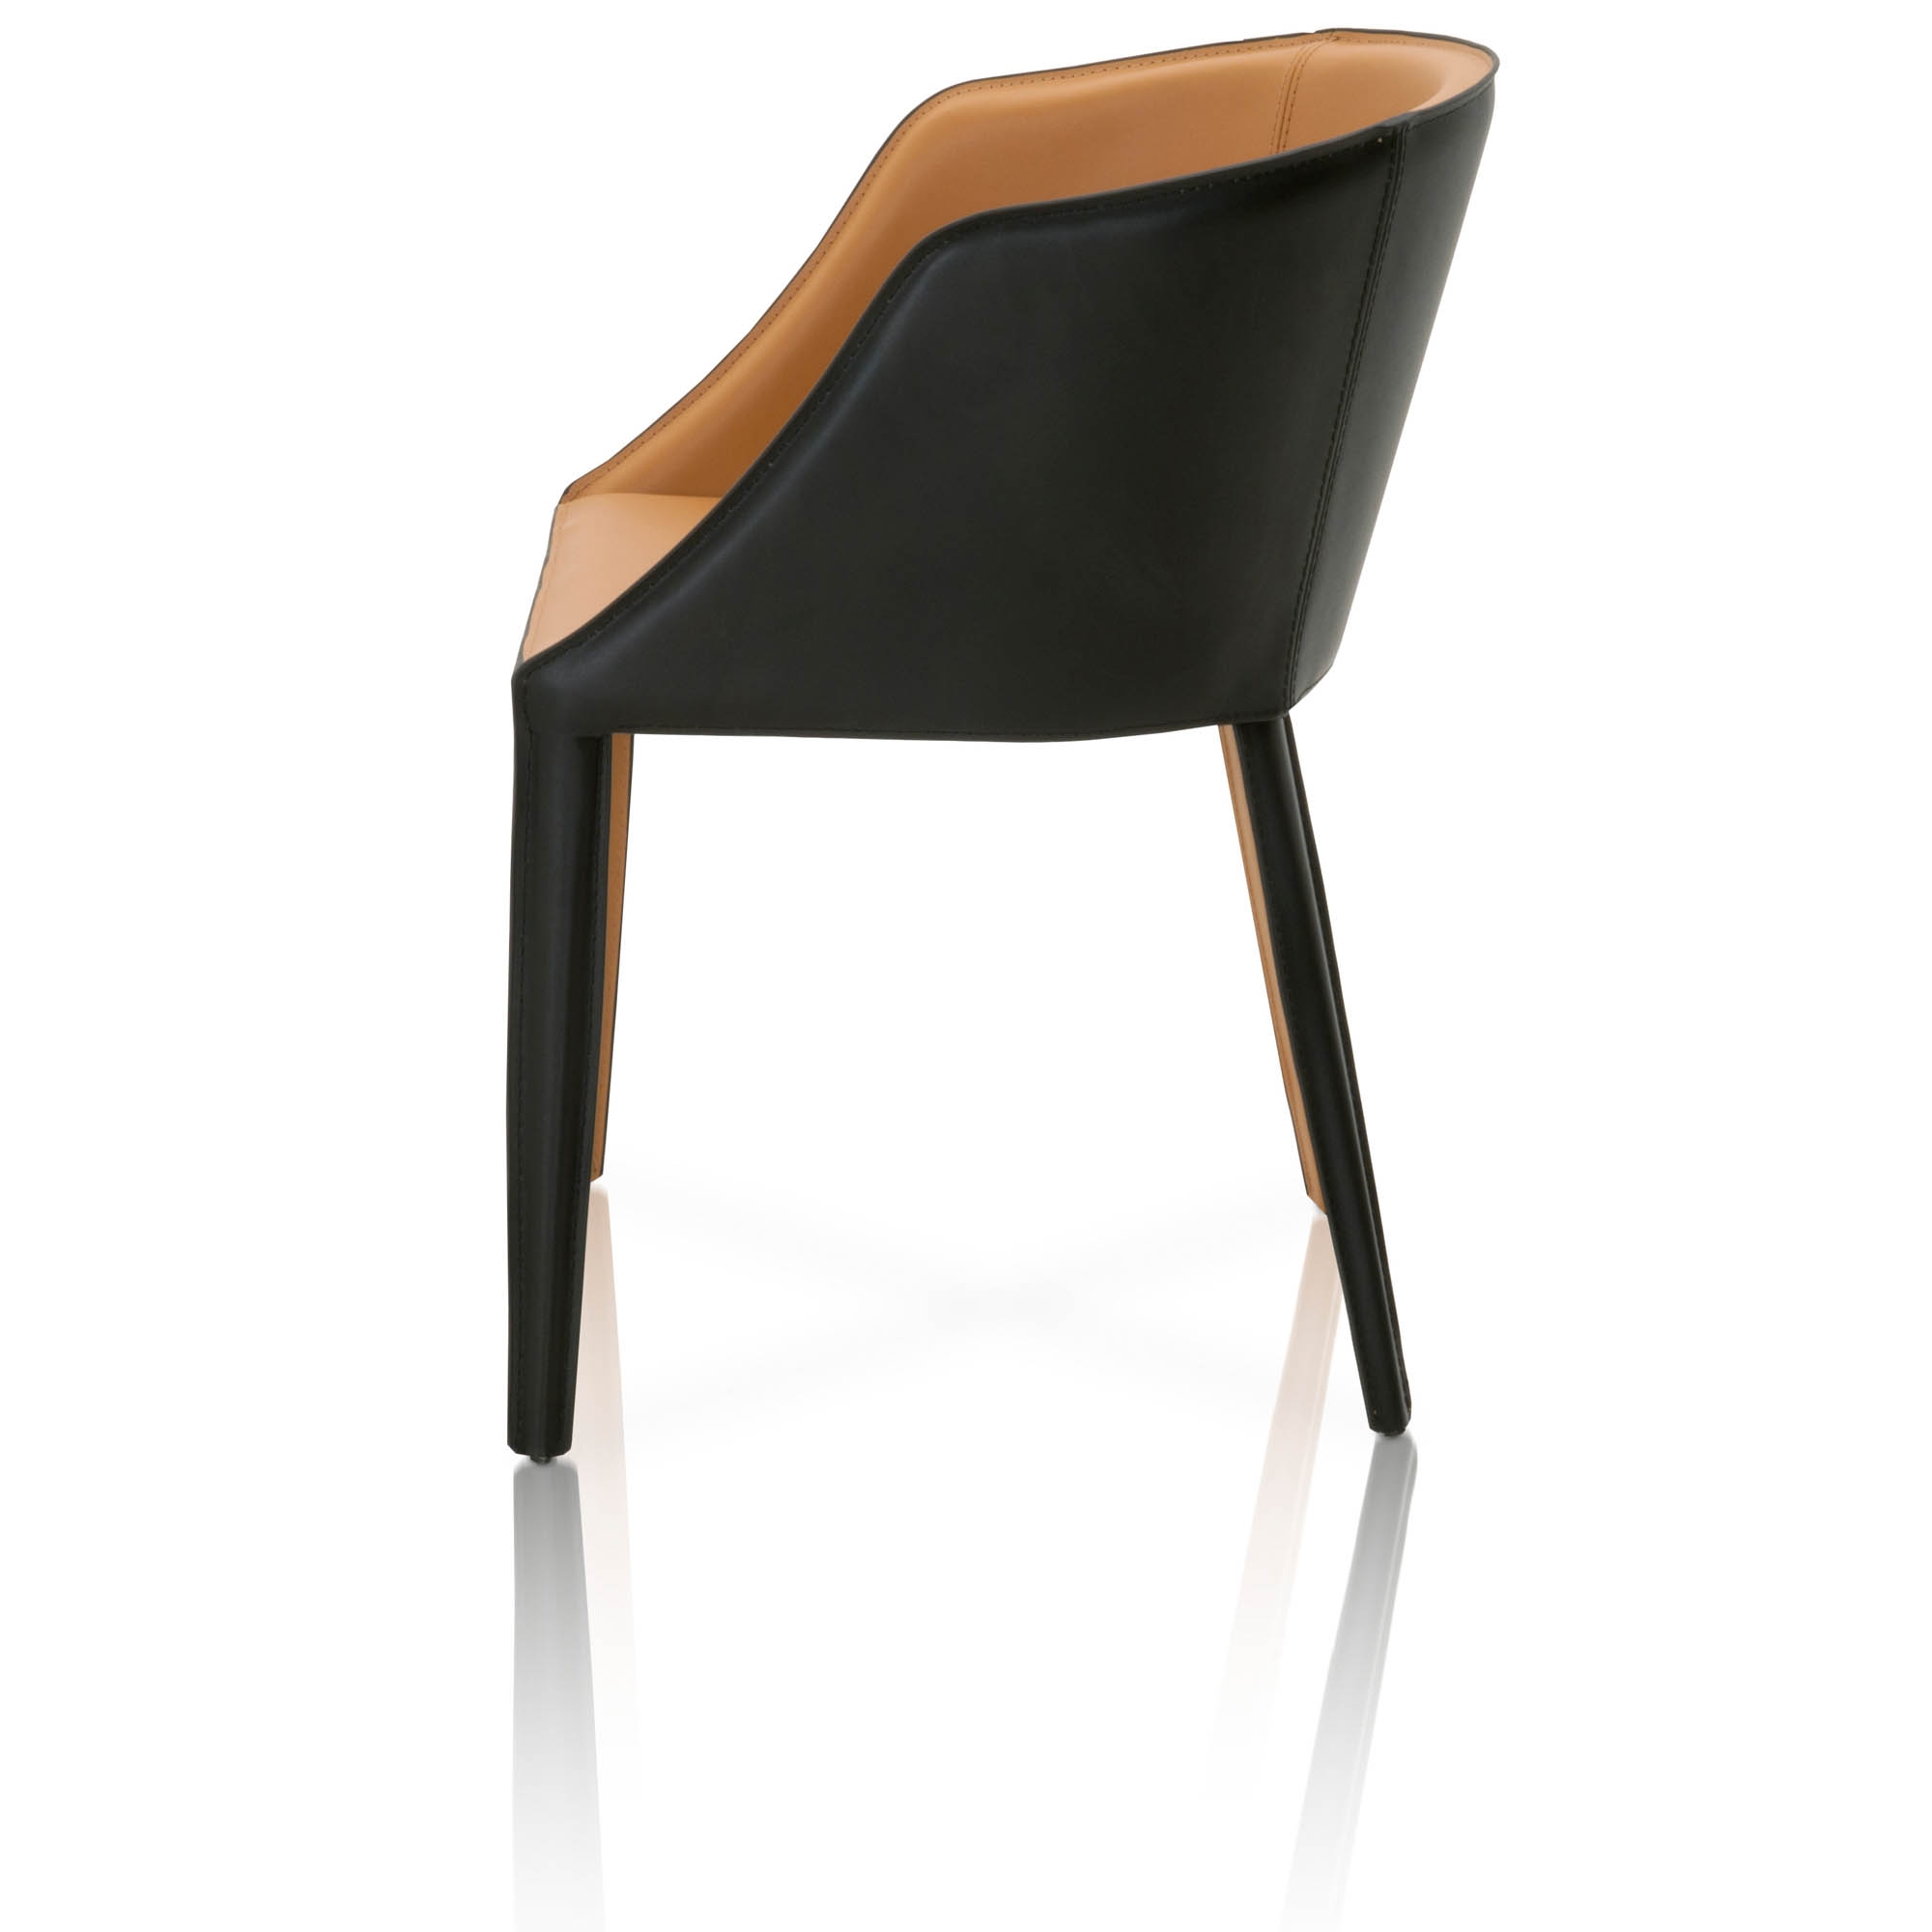 Fontana Dining Chair, Saddle Bonded Leather - Image 2